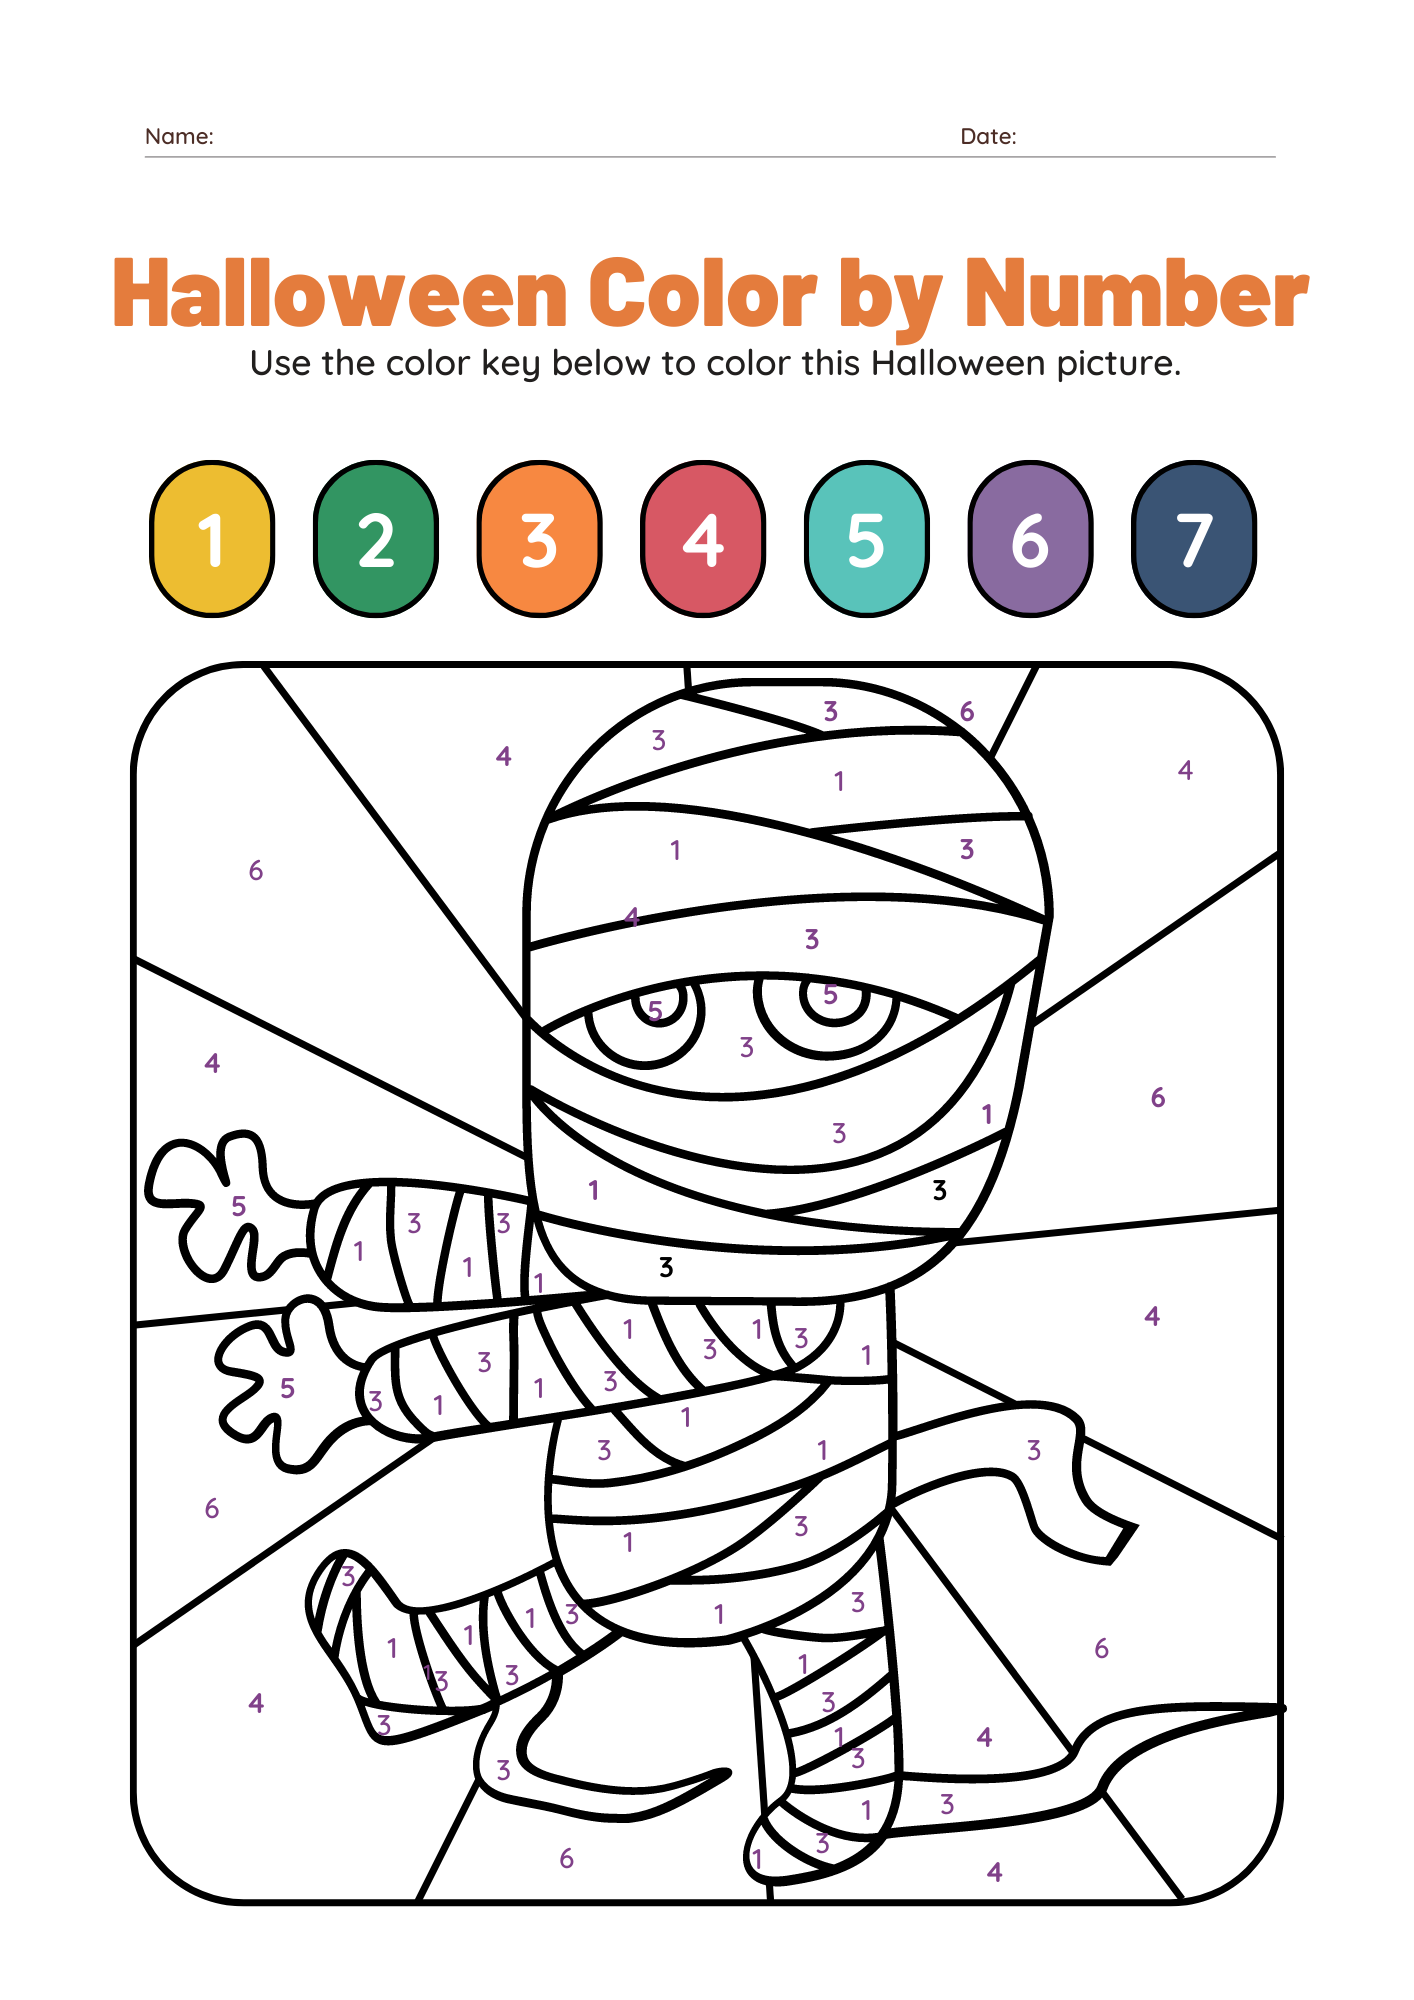 https://images.squarespace-cdn.com/content/v1/5dc22a498d34bc5e595537ad/285ad229-c2c7-472e-9e17-25bae8fa0fc6/Colorful+Fun+Color+by+Number+Halloween+Coloring+Worksheet+Set+%288%29.png